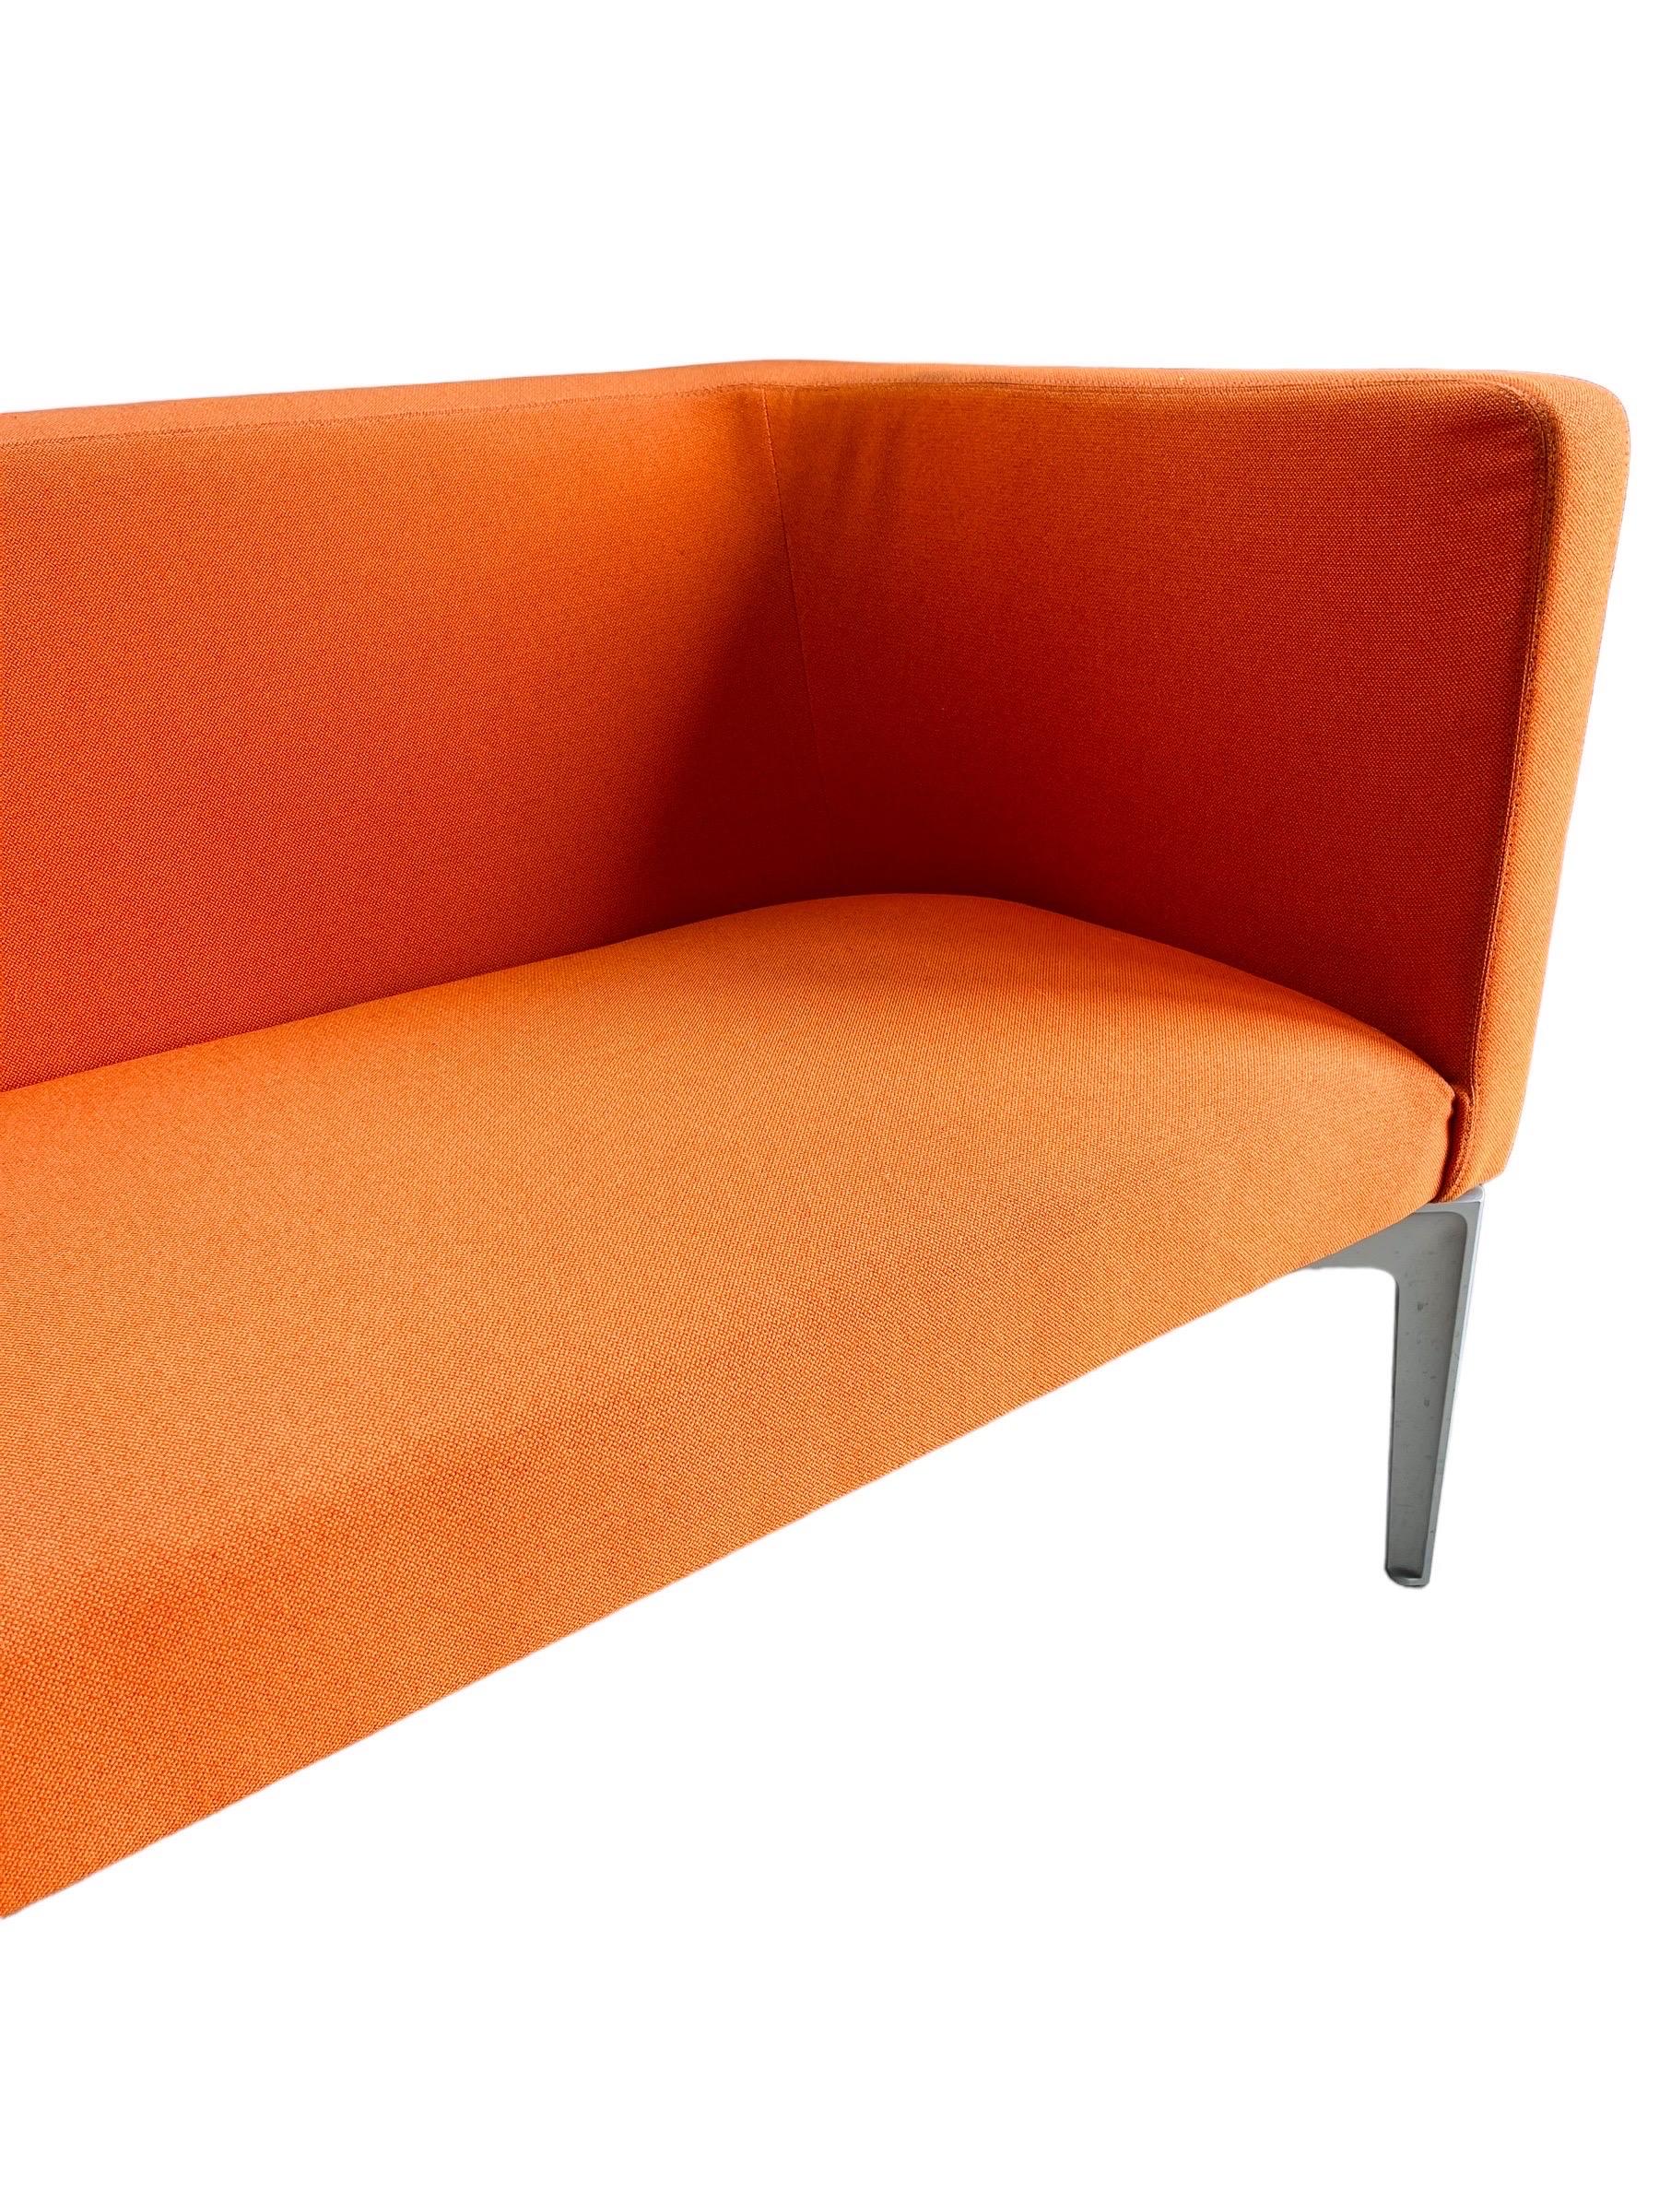 Steelcase Bivi Rumble Seat Collection: Vibrant Orange Modern Sofa 2